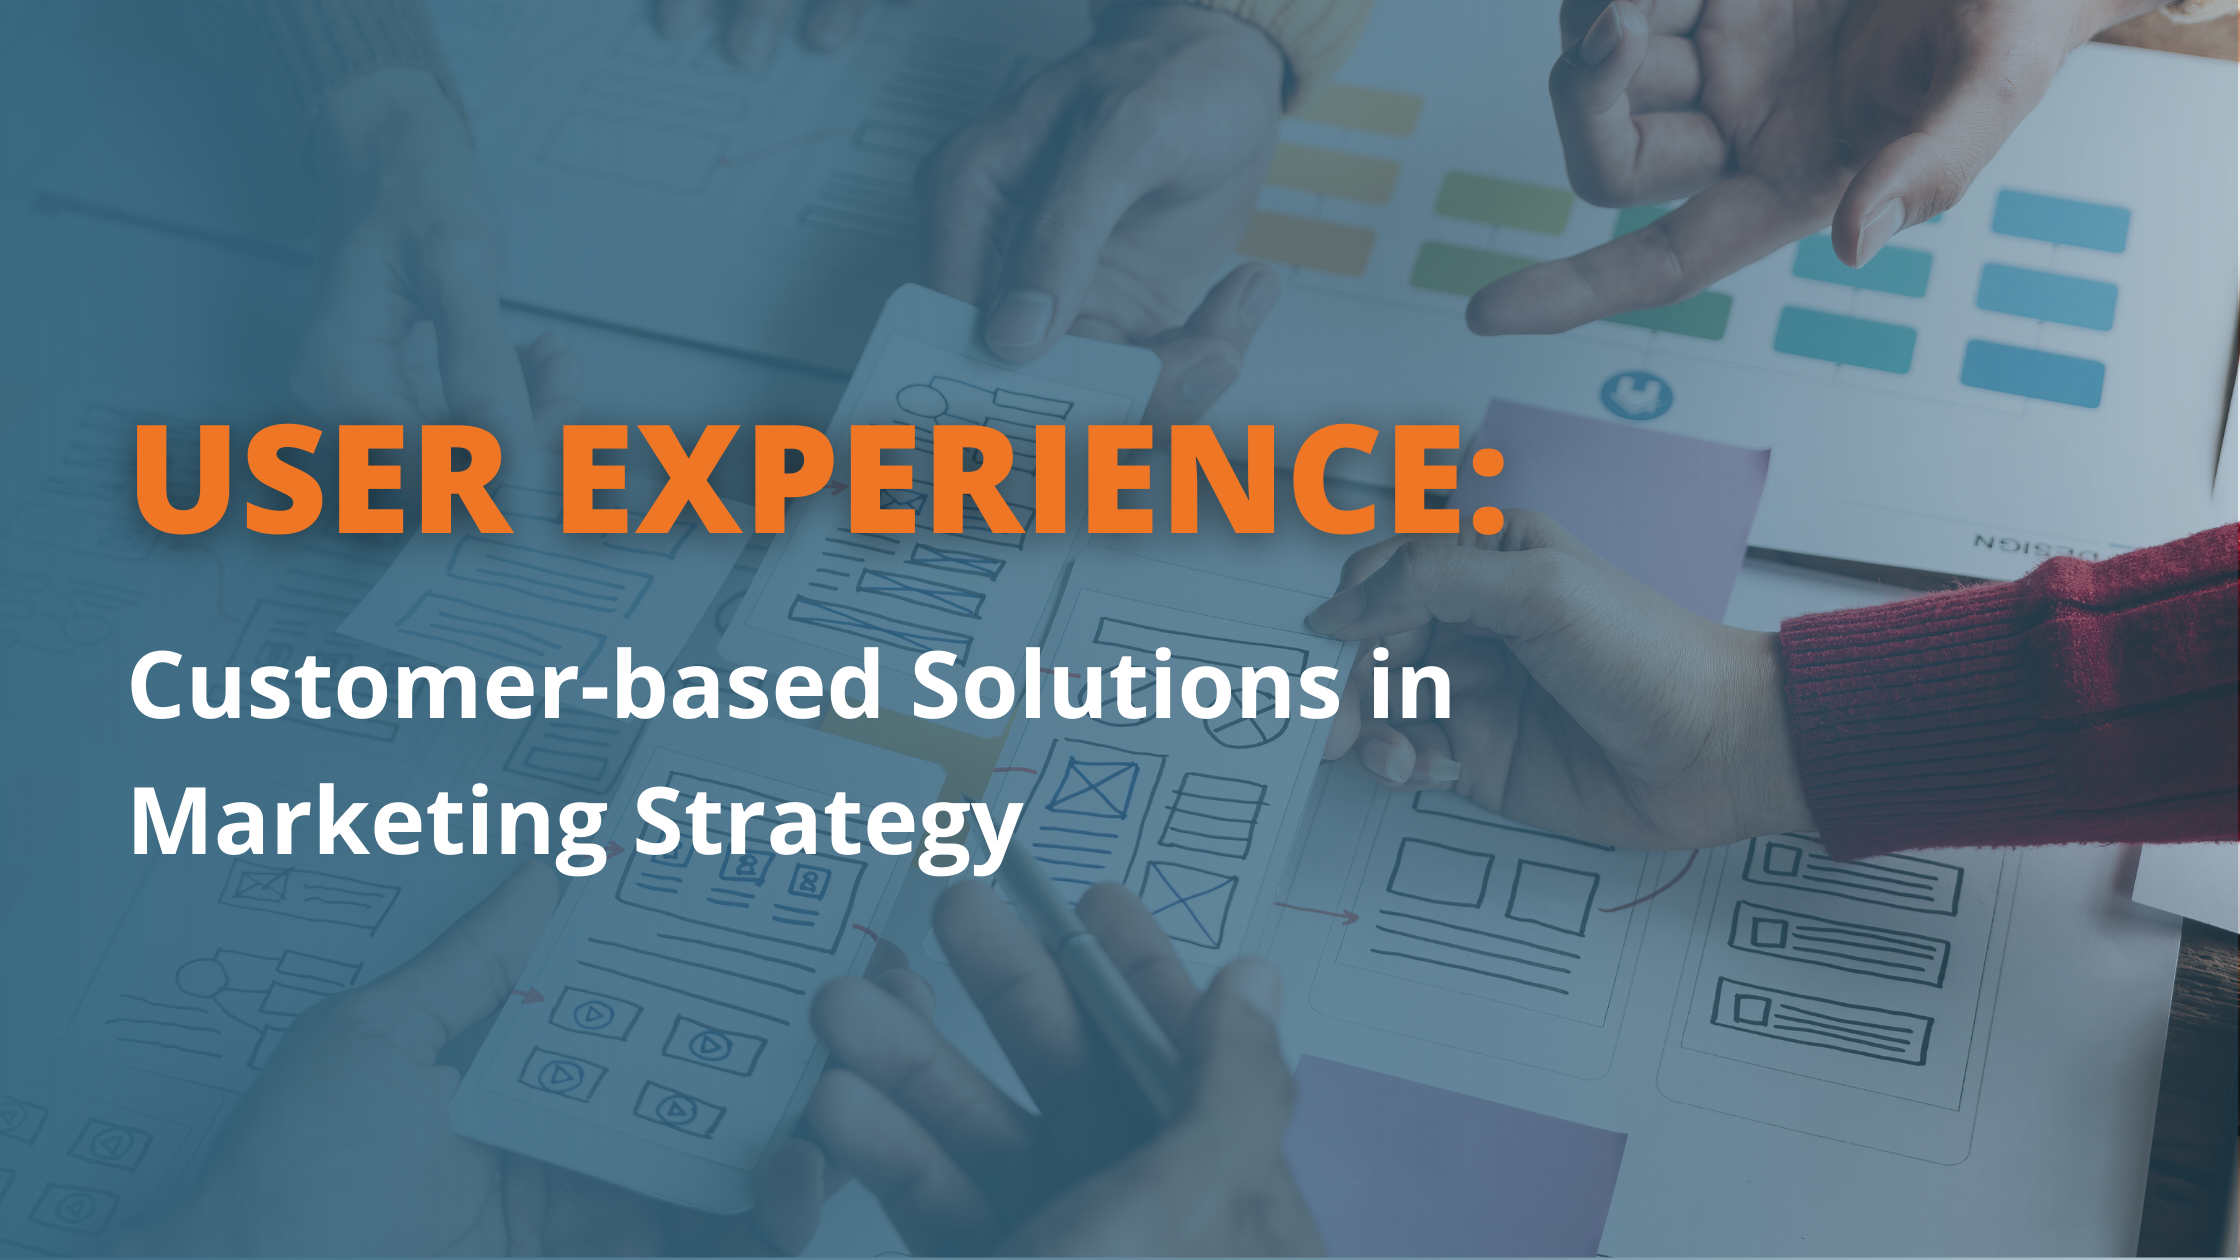 Team at Burkhart Marketing Partners brainstorming user experience strategies, highlighting customer-centric solutions.